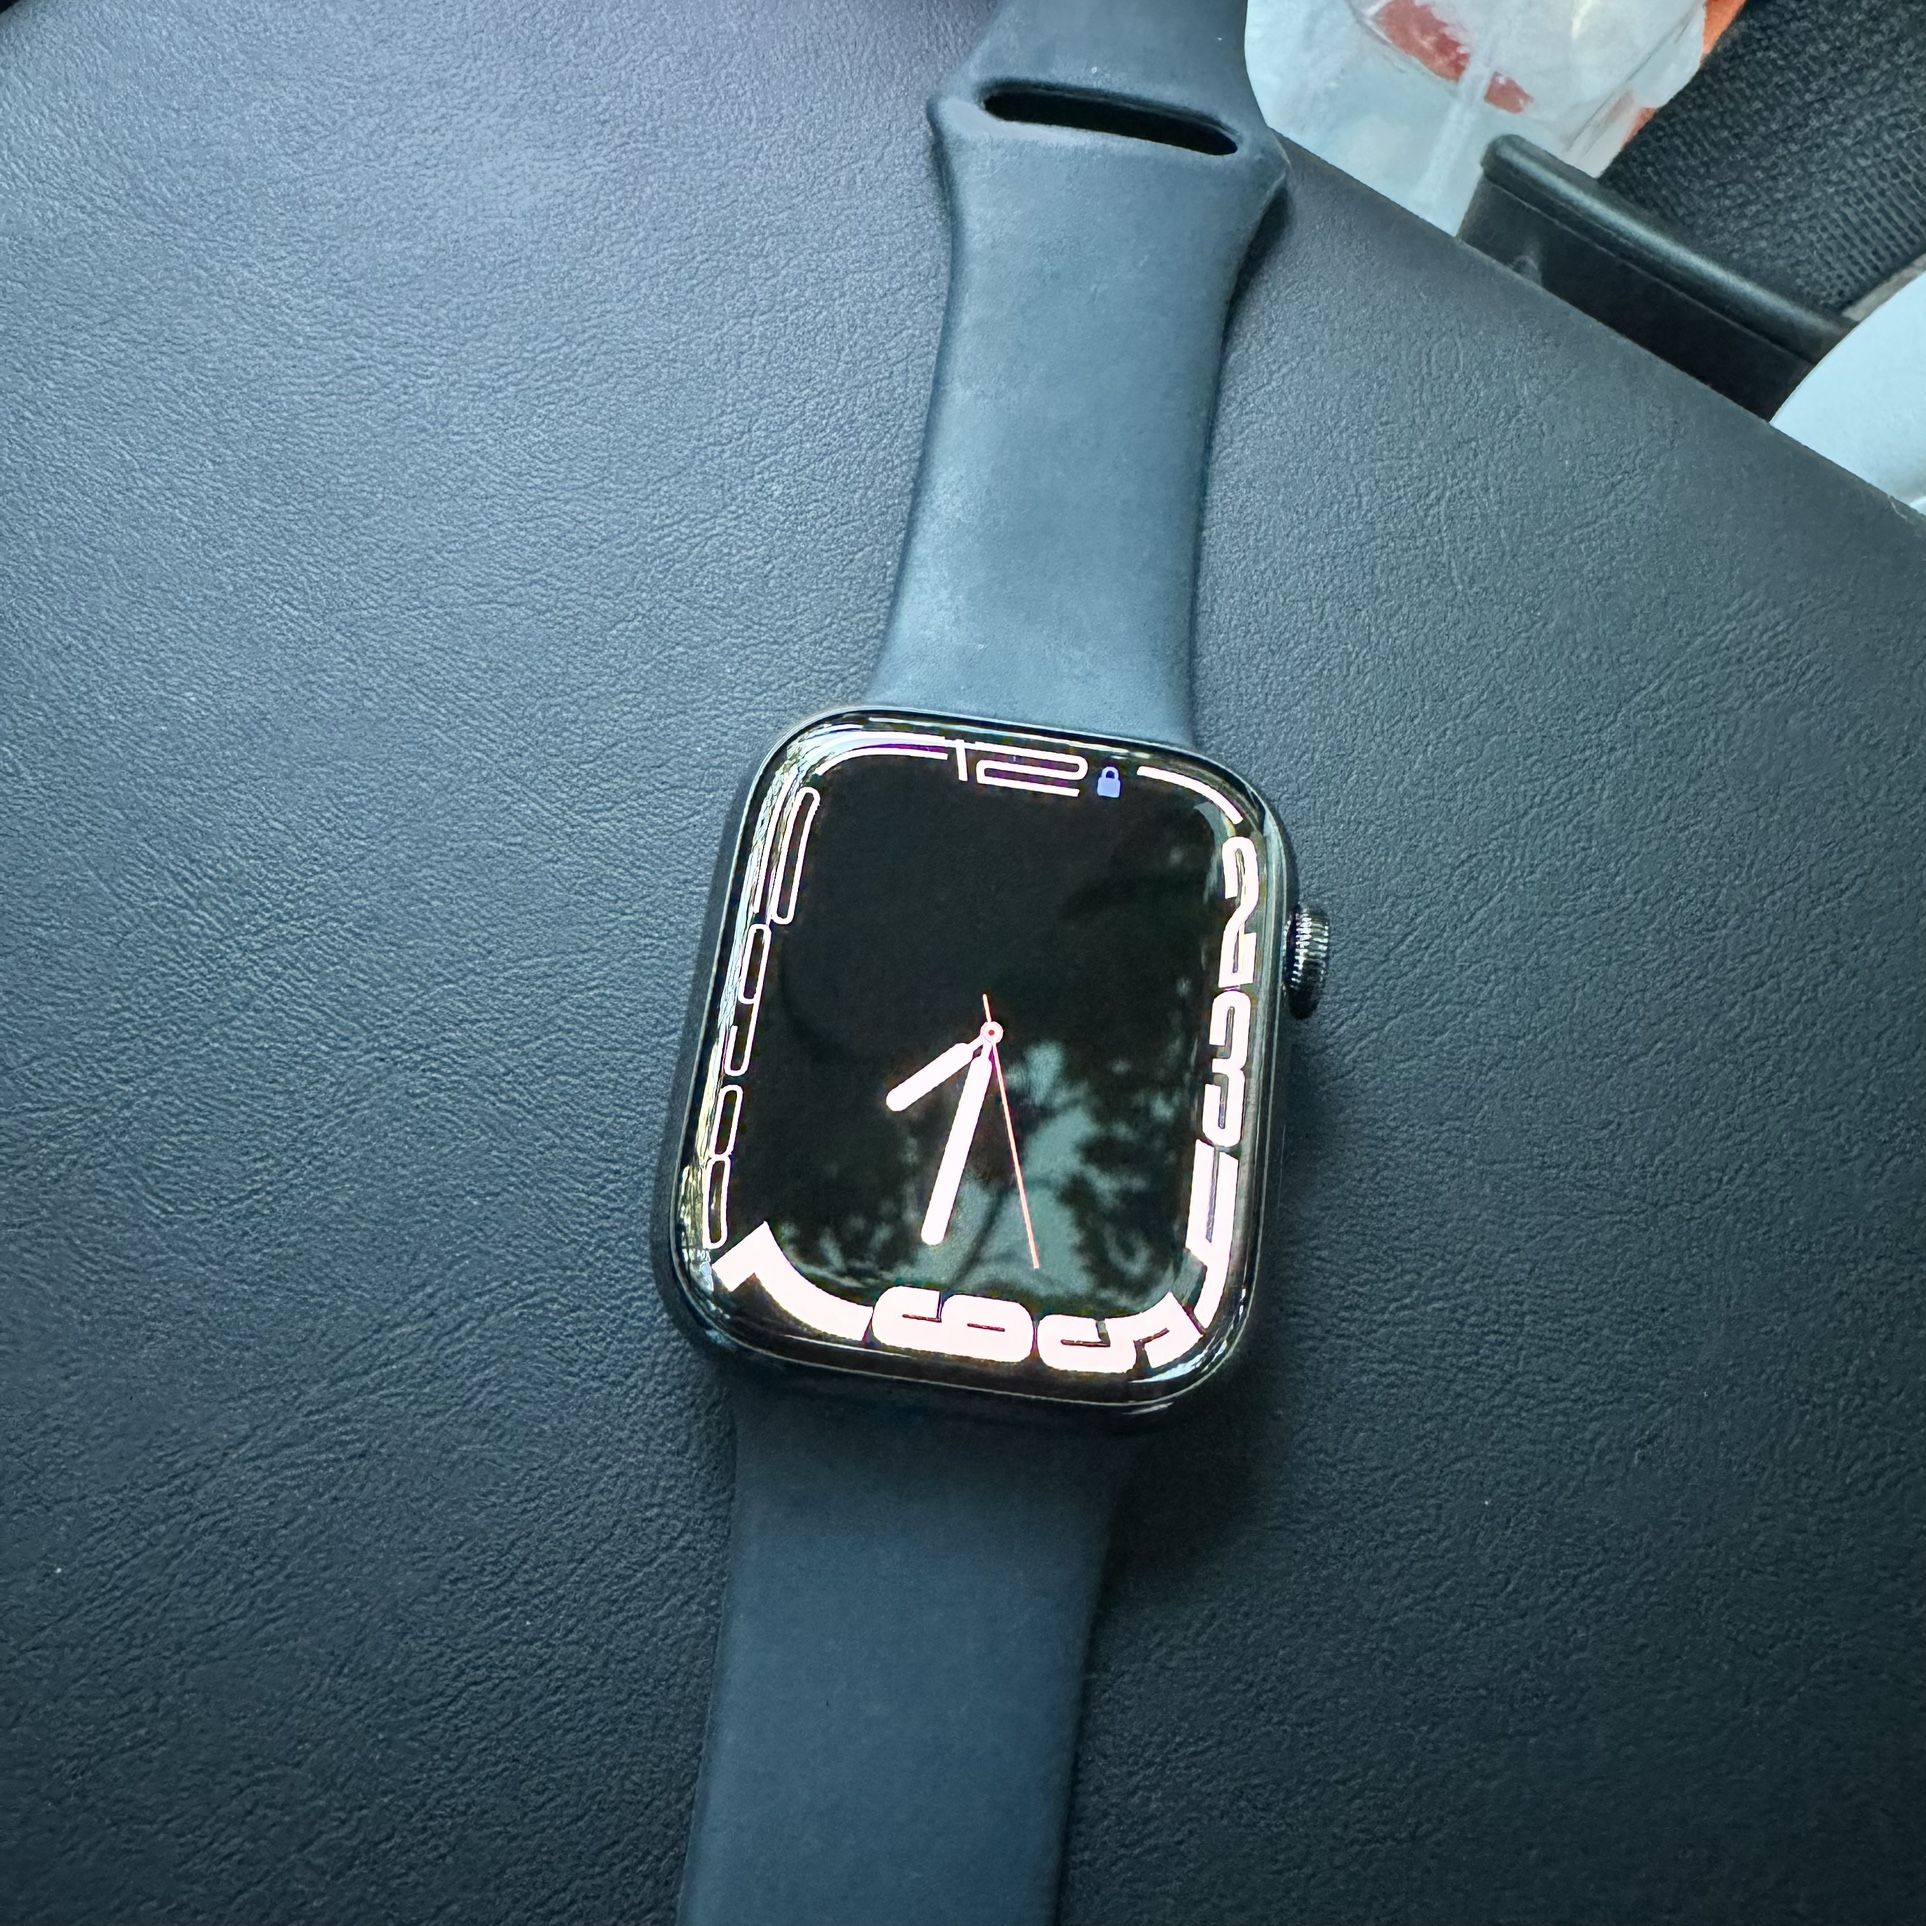 Apple Watch Series 7 Graphite Stainless Steel